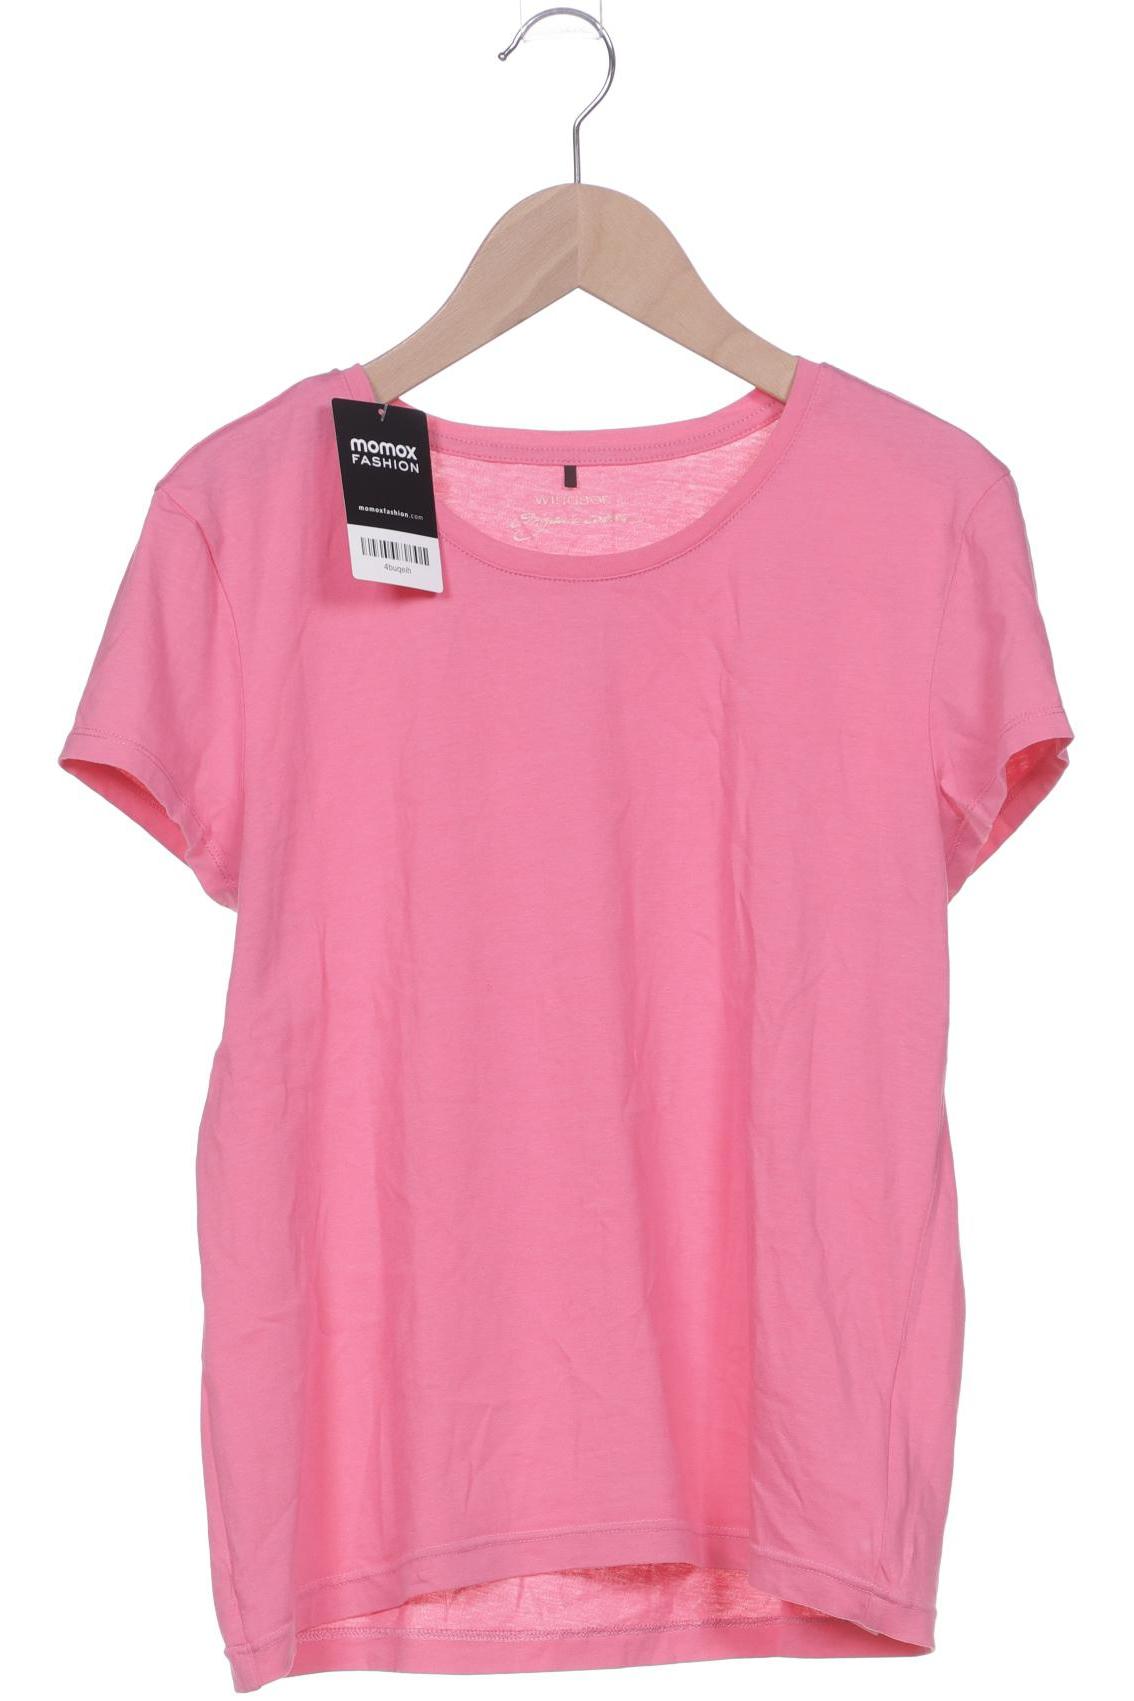 windsor. Damen T-Shirt, pink von windsor.